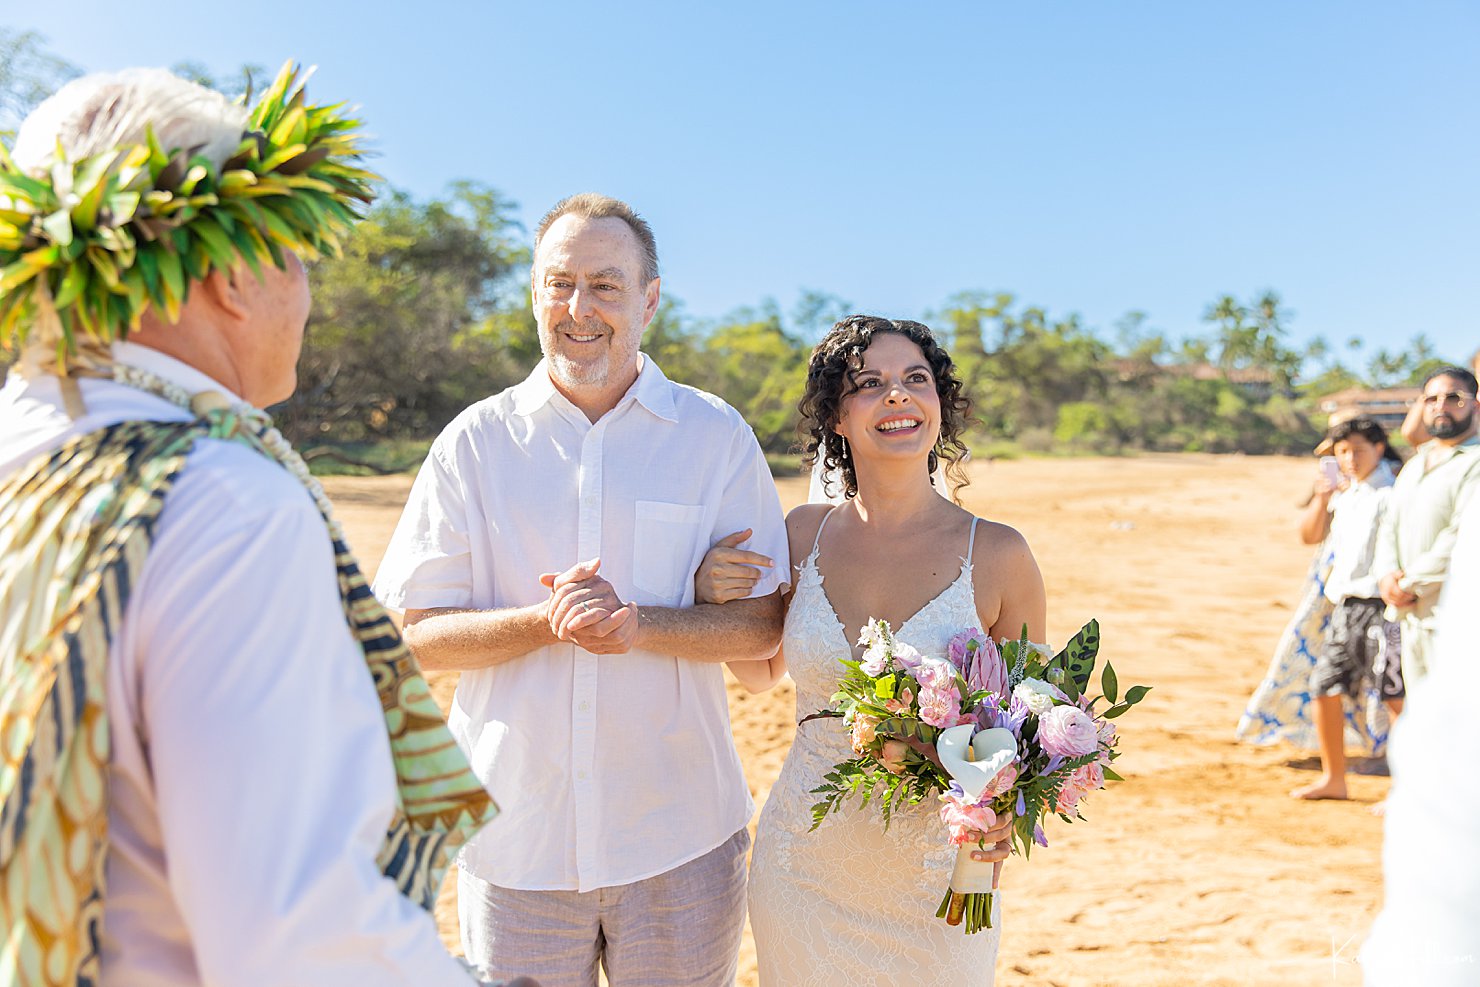 Bridal entrance at a Beach Wedding in Maui